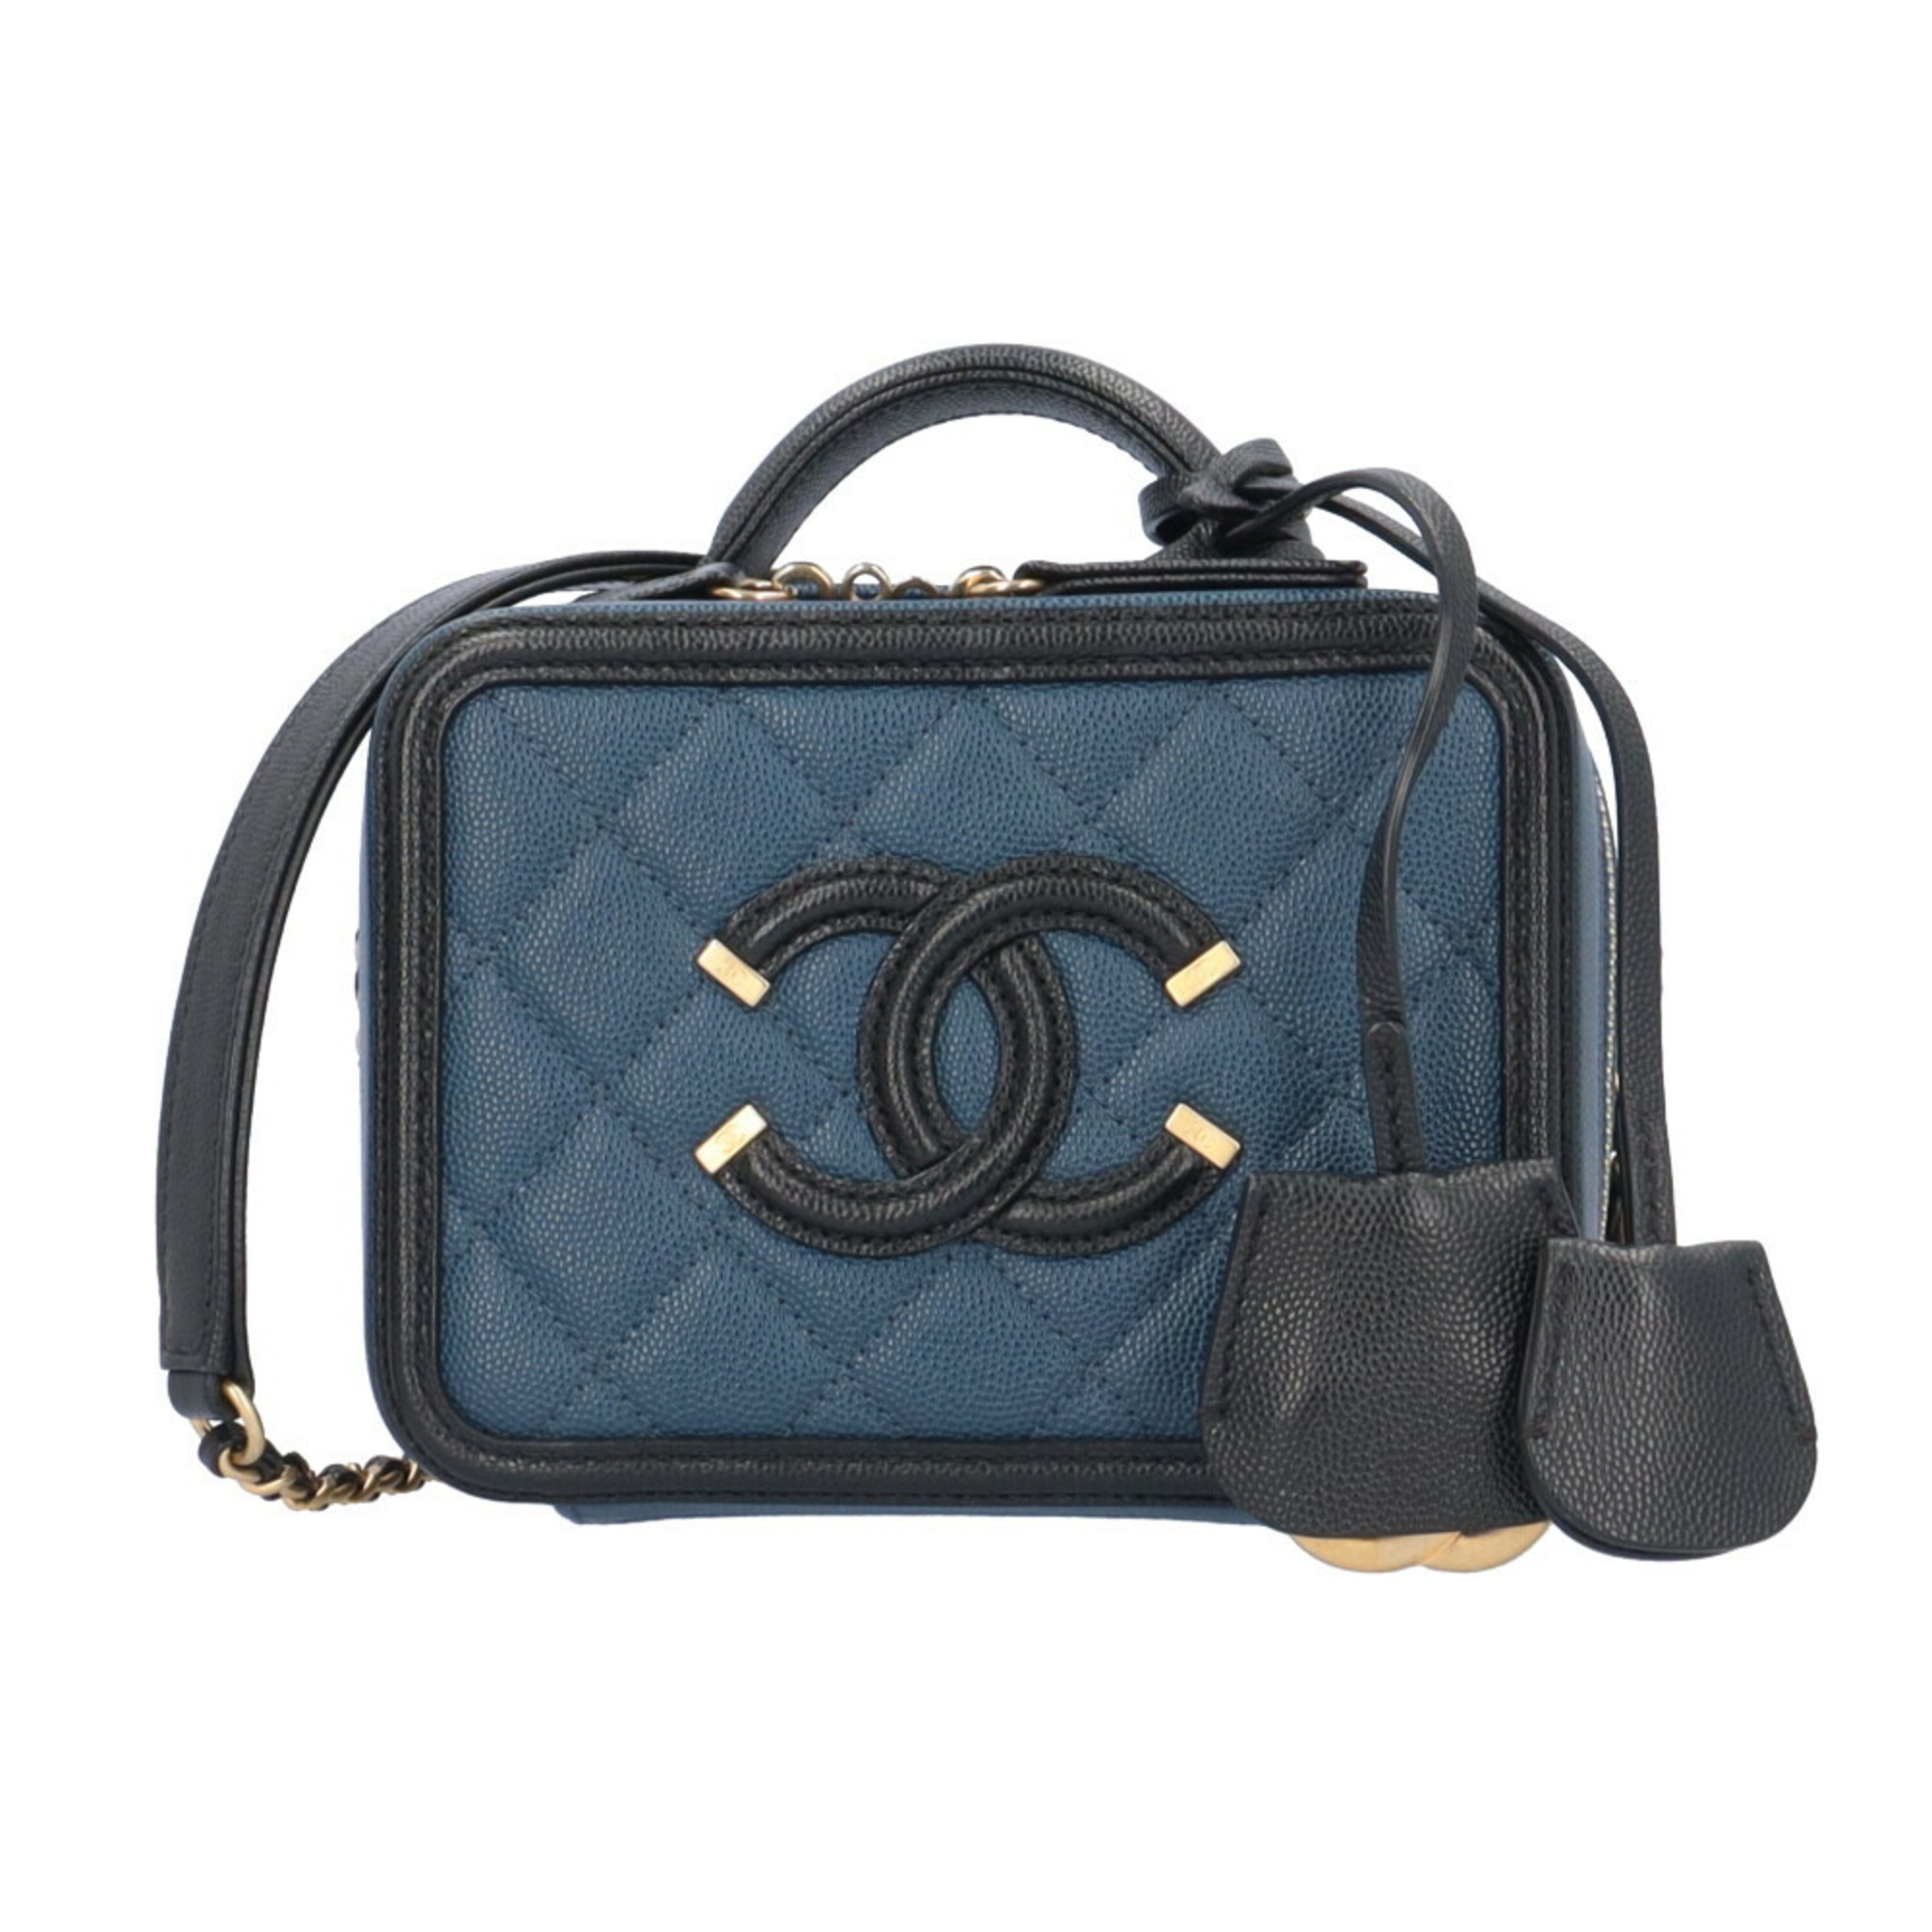 Chanel Small Chain Vanity CC Filigree Shoulder Bag Caviar Skin Navy Women's CHANEL